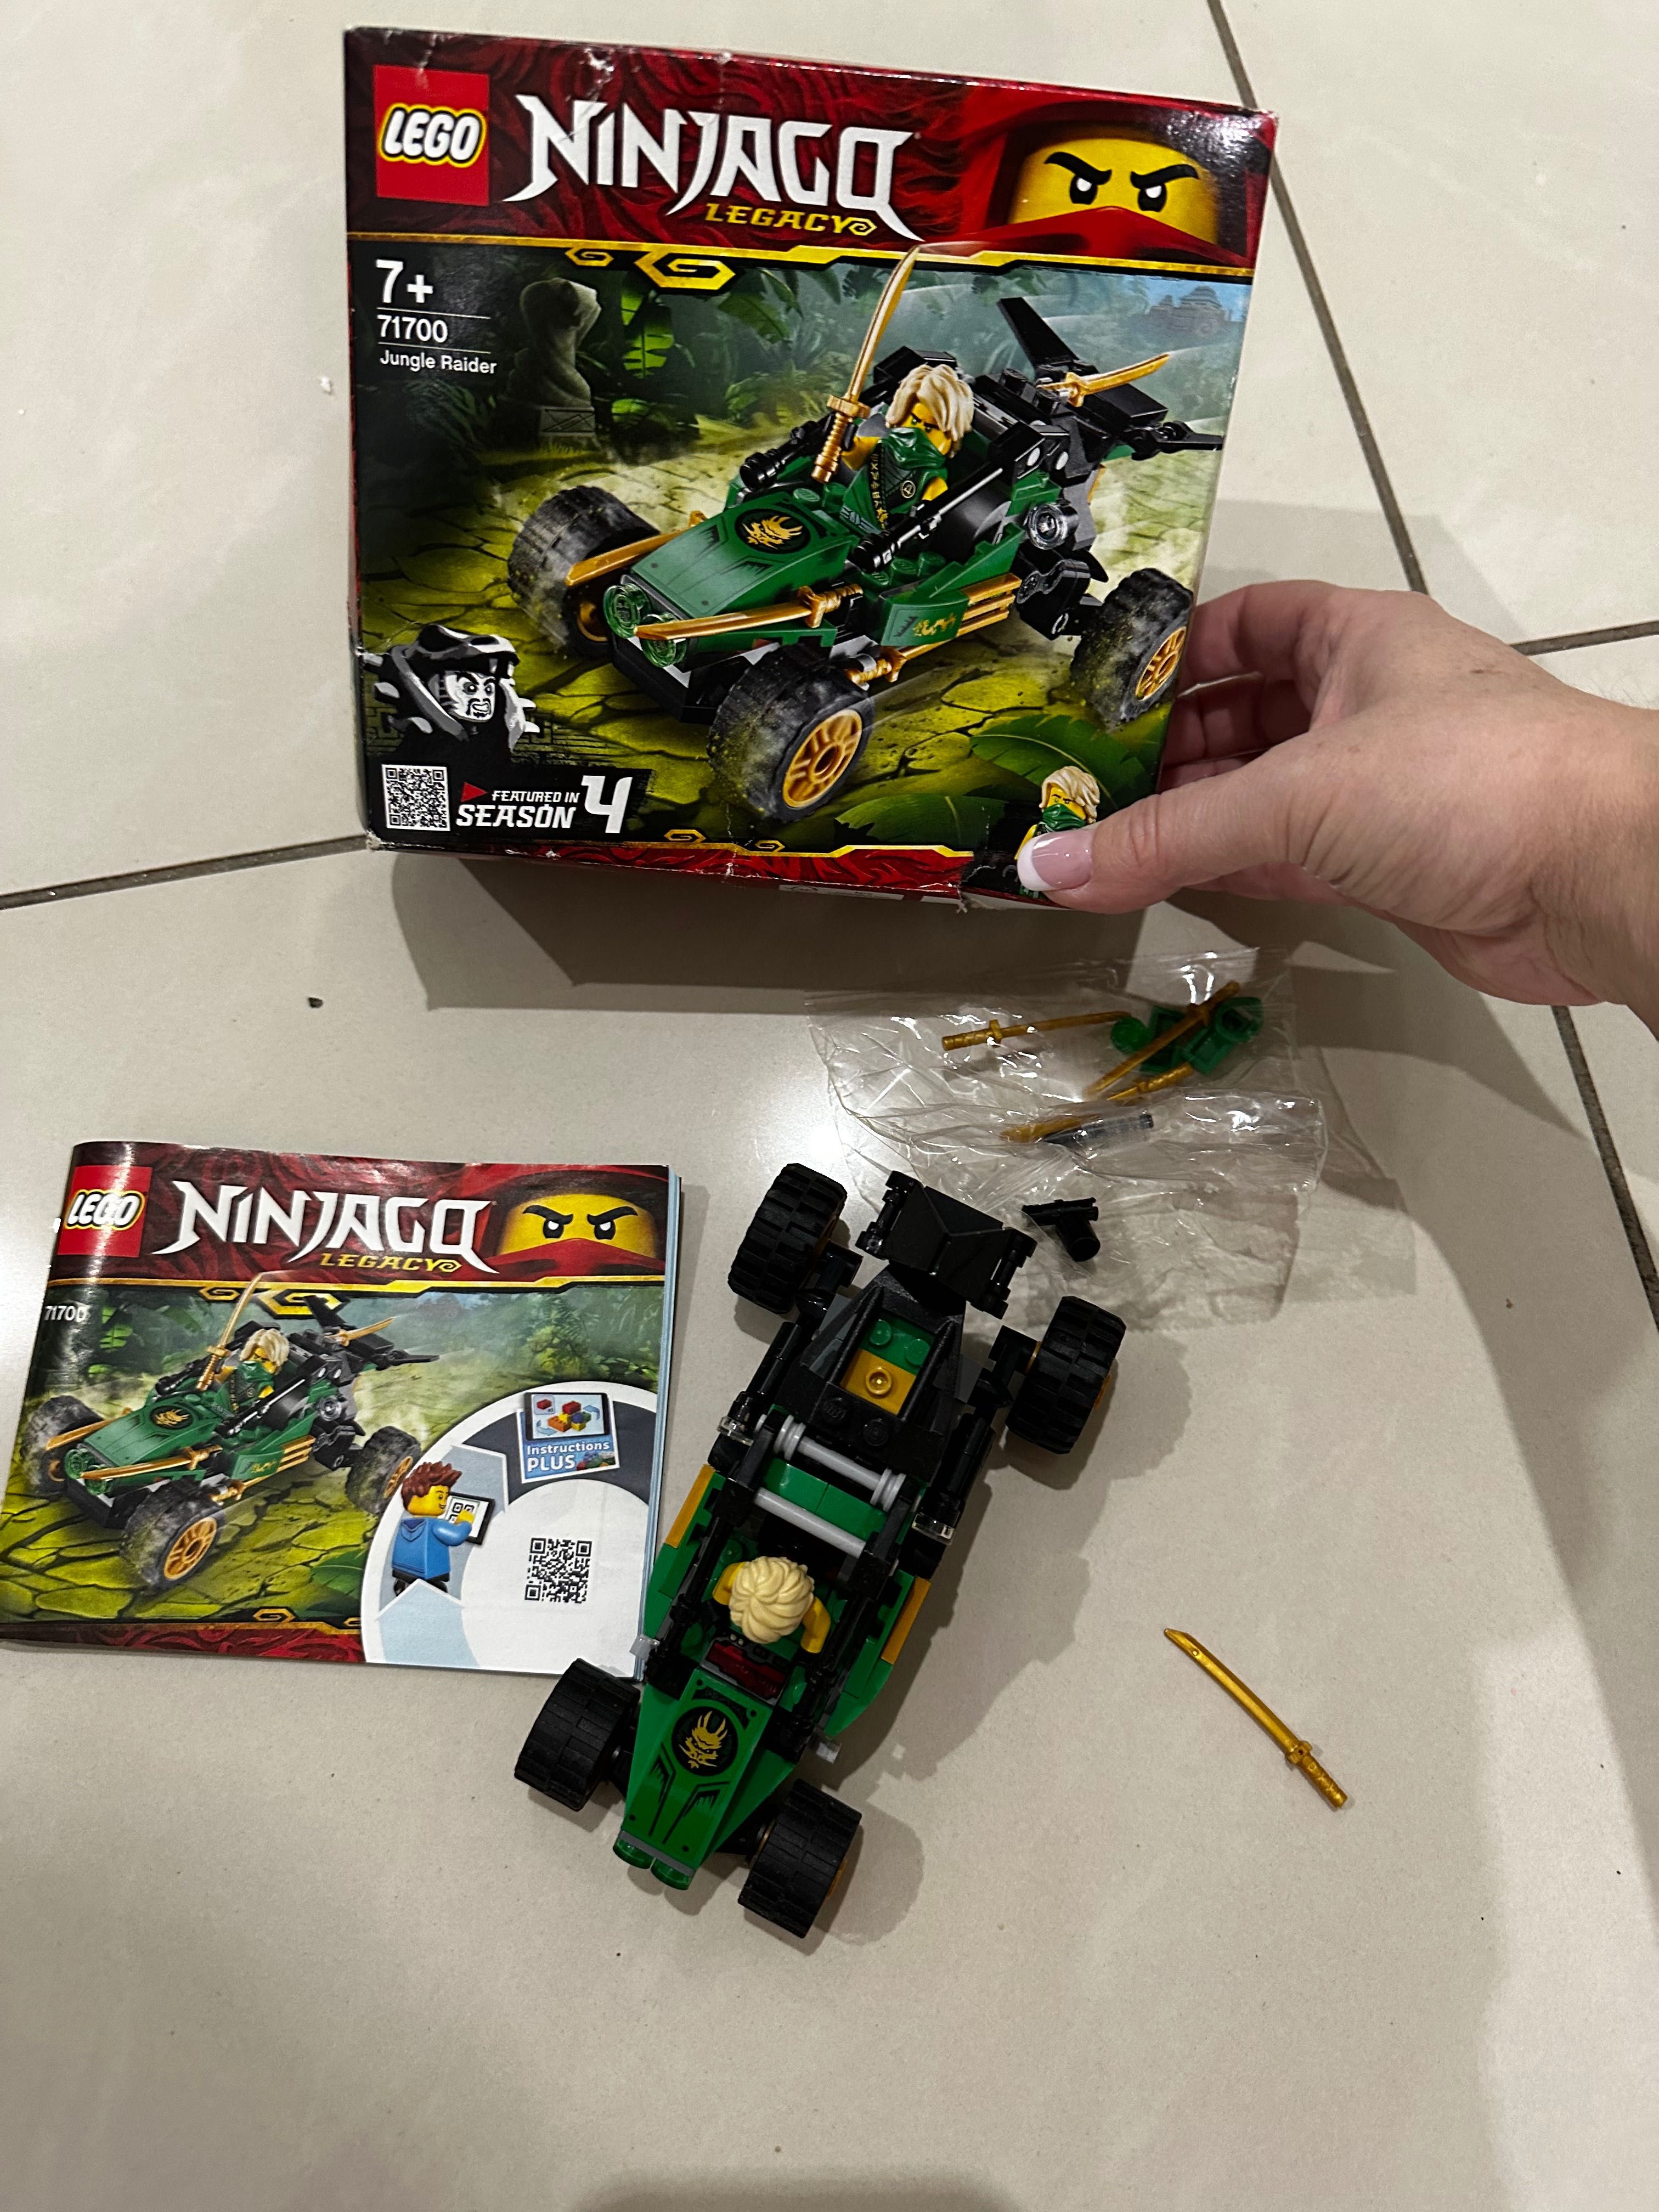 Lego ninjago legacy 7lat  71700